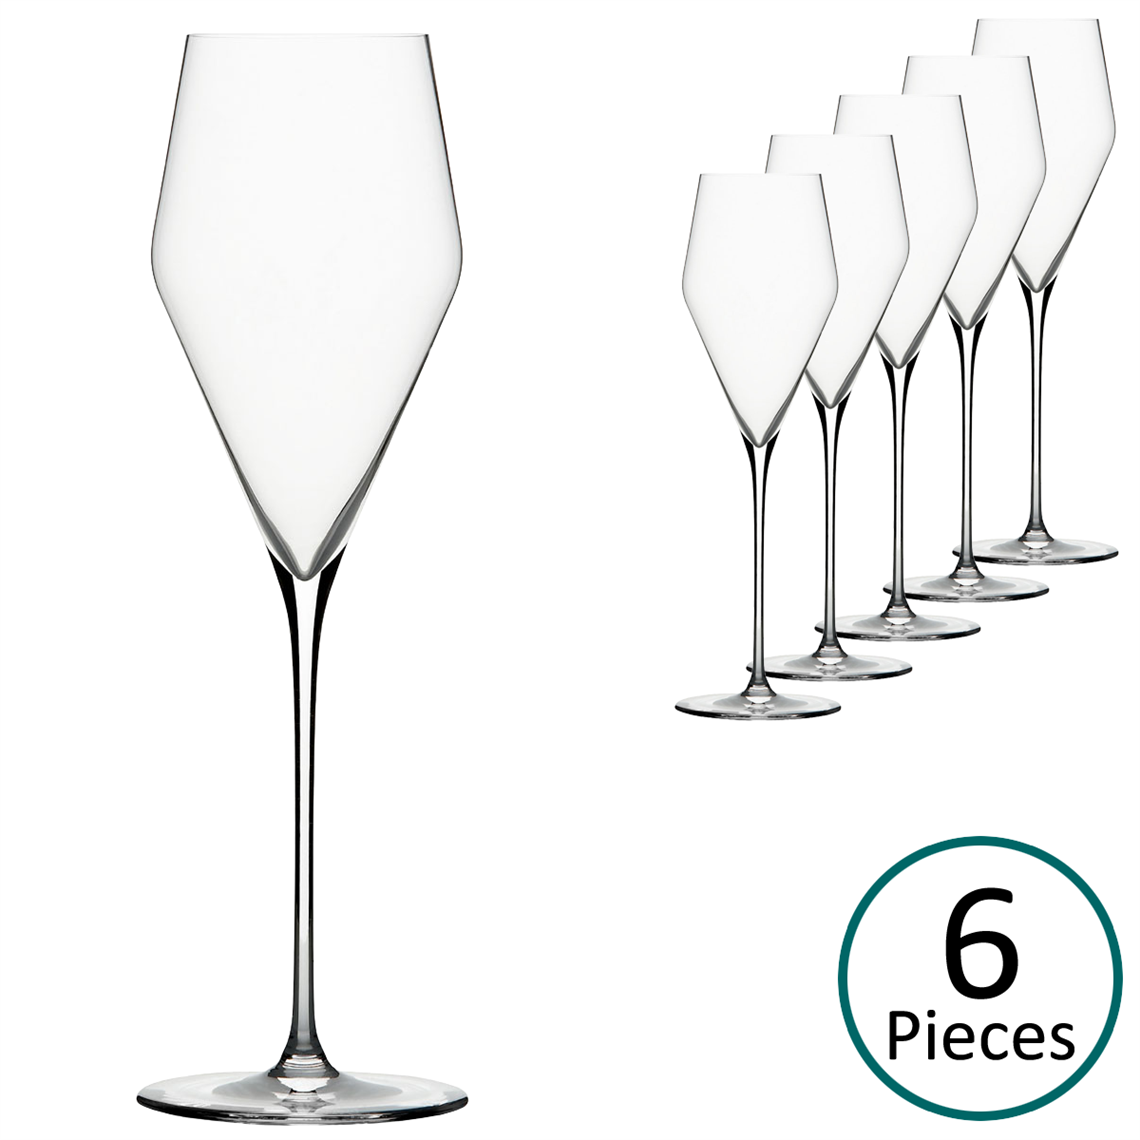 Zalto Denk Art Champagne Glass / Tulip - Set of 6